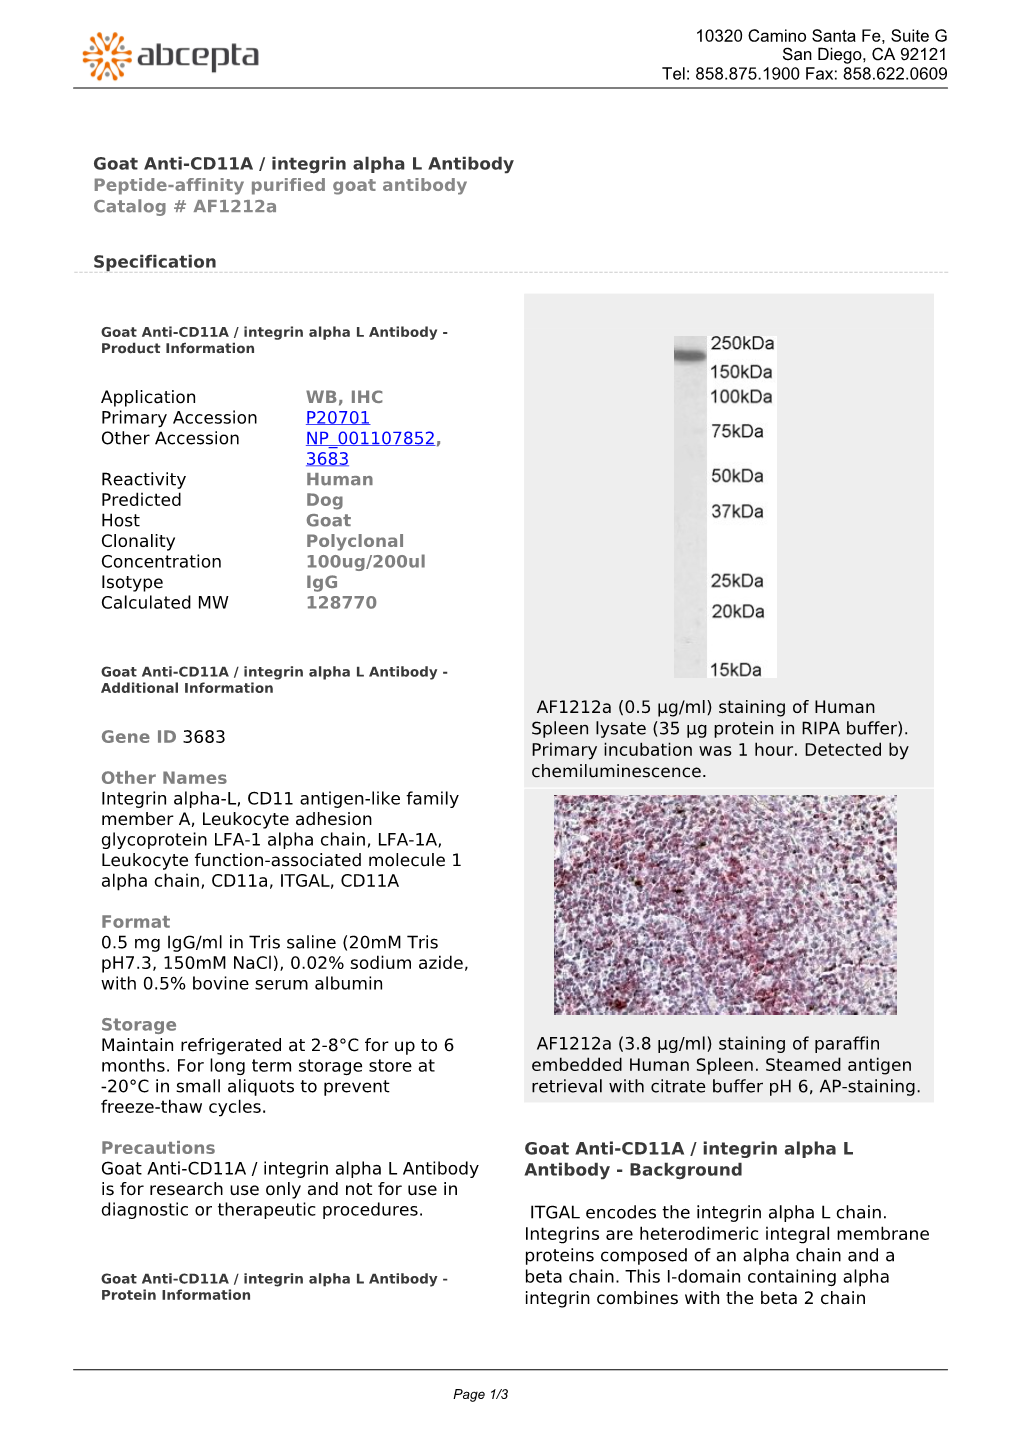 Goat Anti-CD11A / Integrin Alpha L Antibody Peptide-Affinity Purified Goat Antibody Catalog # Af1212a